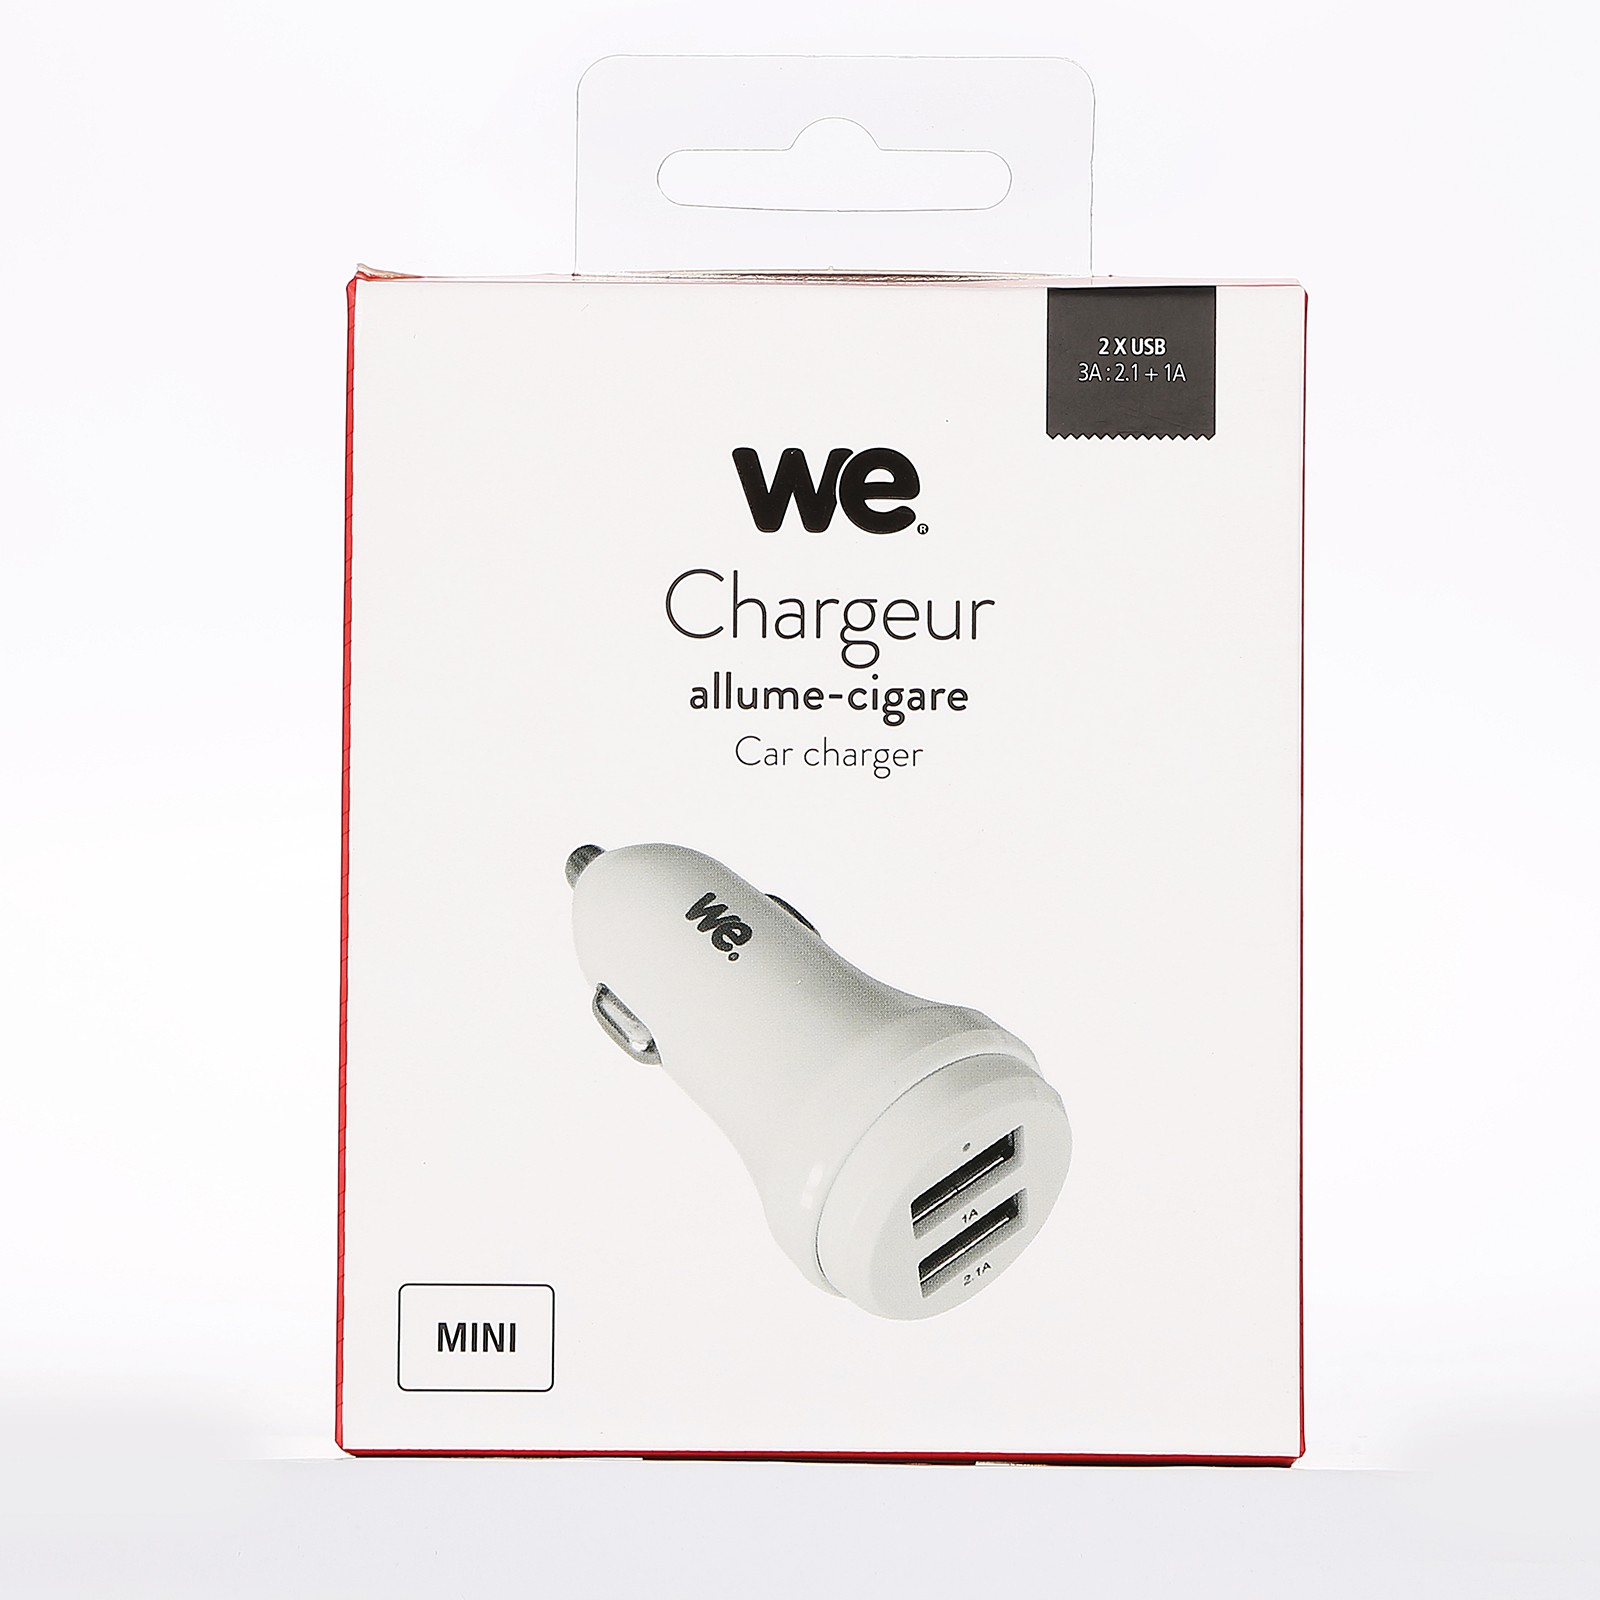 Chargeur allume-cigare WE - 2 ports USB (1 USB-A 5V/2,4A et 1 USB-C V/3A),  Total (USB-A+C) 5V/3A pour smartphone, GPS, etc